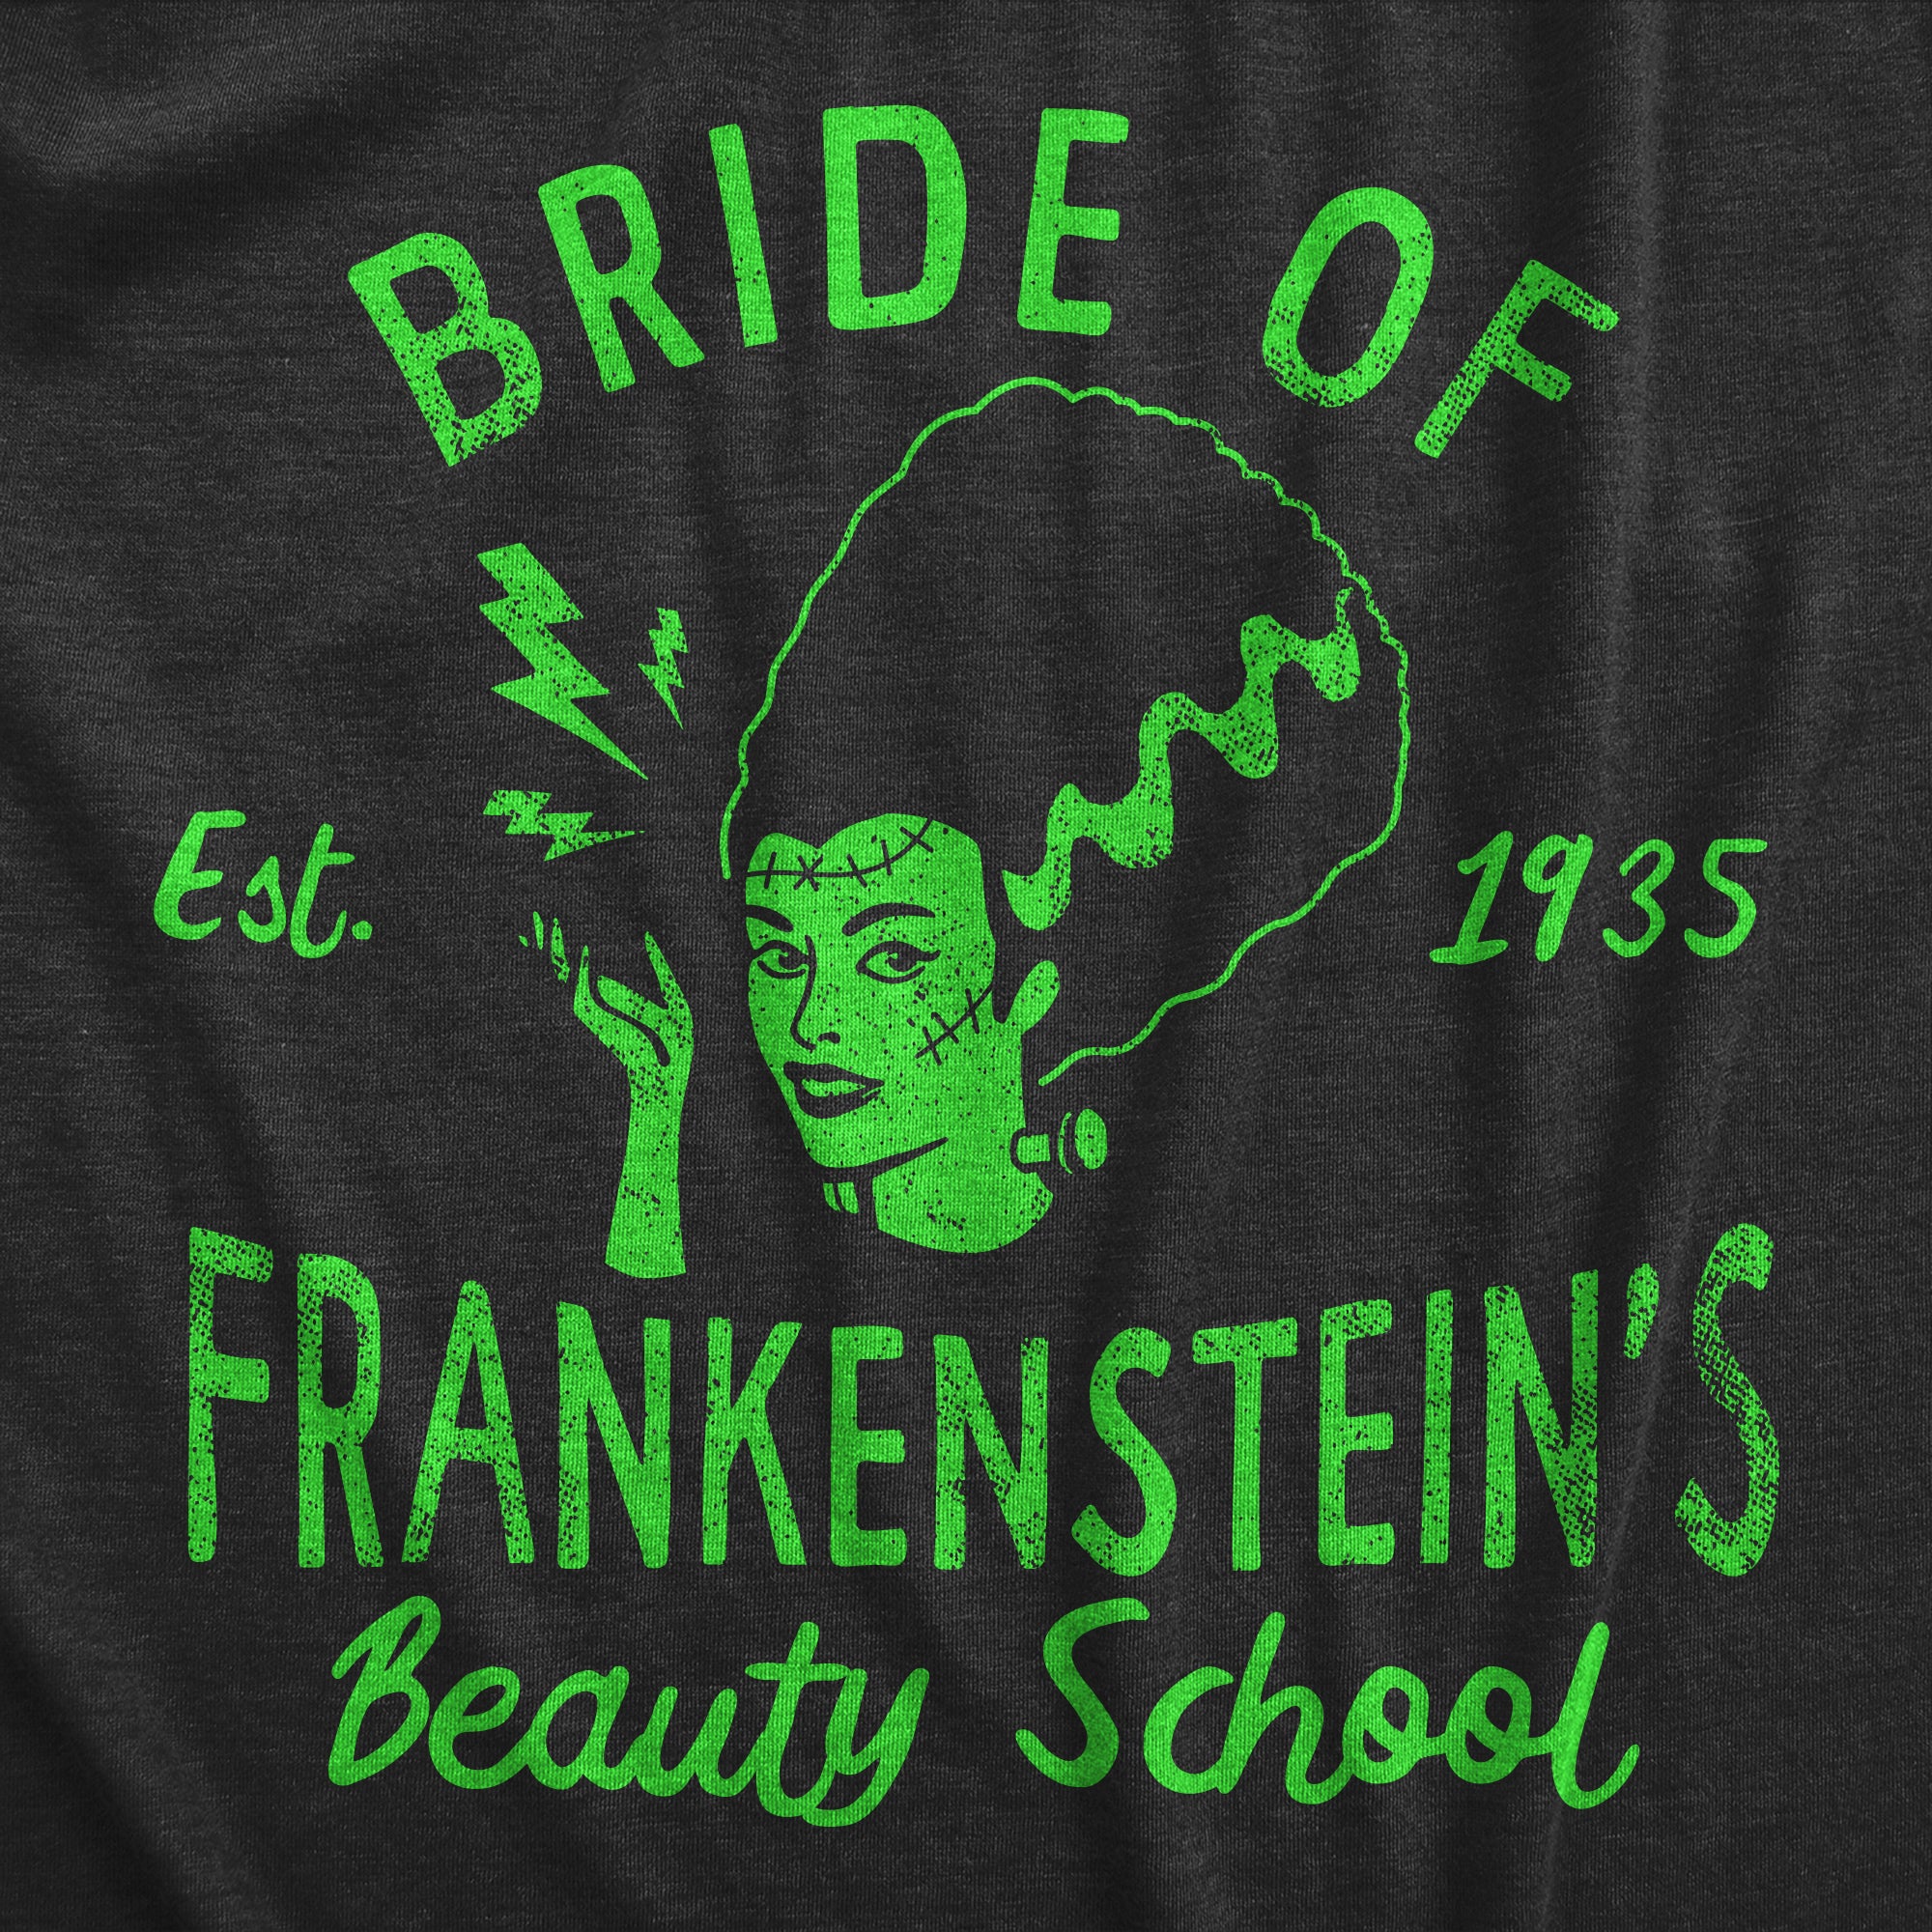 Funny Heather Black - FRANKENSTEINS Bride Of Frankensteins Womens T Shirt Nerdy Halloween Tee